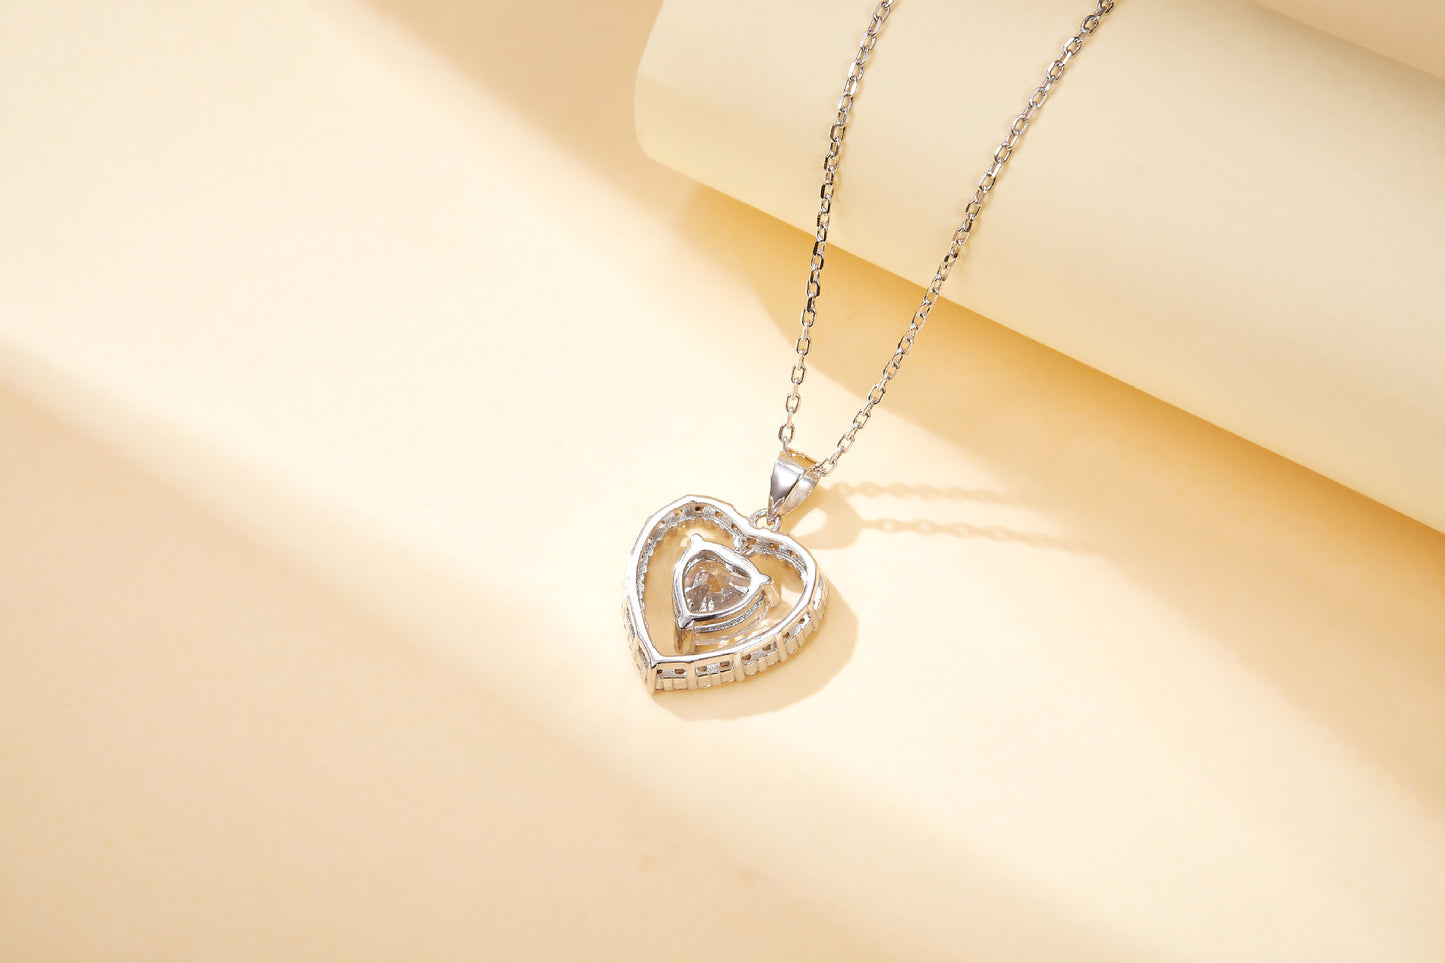 Colourful Heart Zircon Pendant Silver Necklace for Women